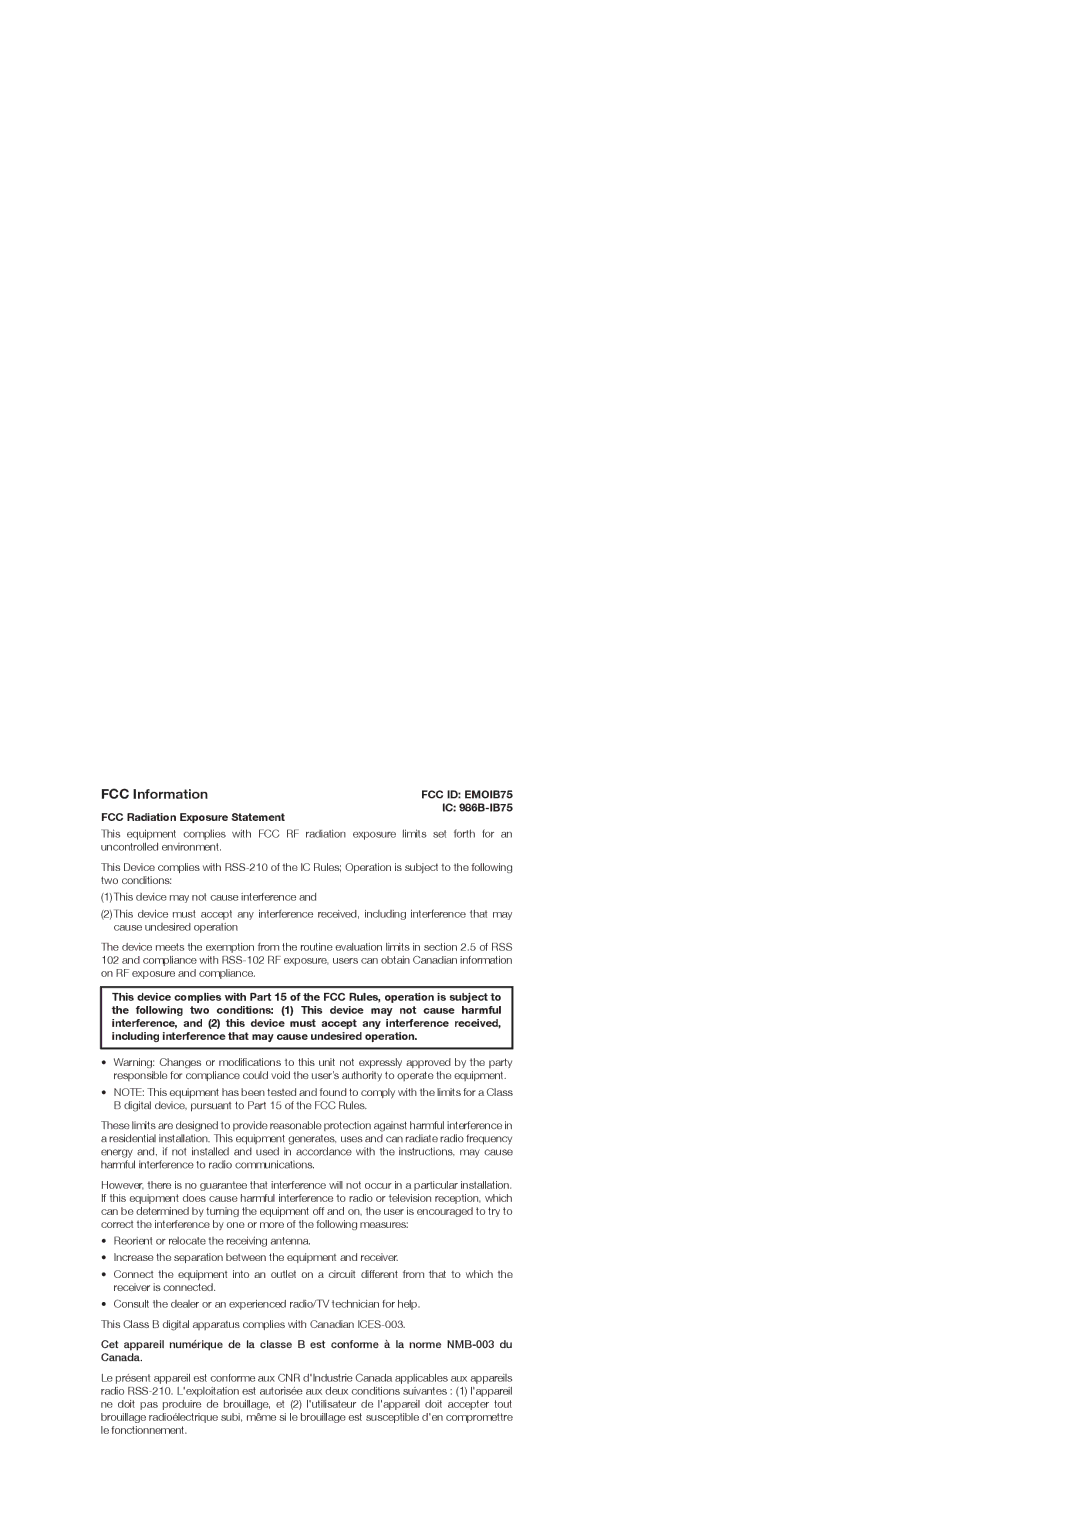 iHome iB75 owner manual FCC Information, FCC Radiation Exposure Statement IC 986B-IB75 